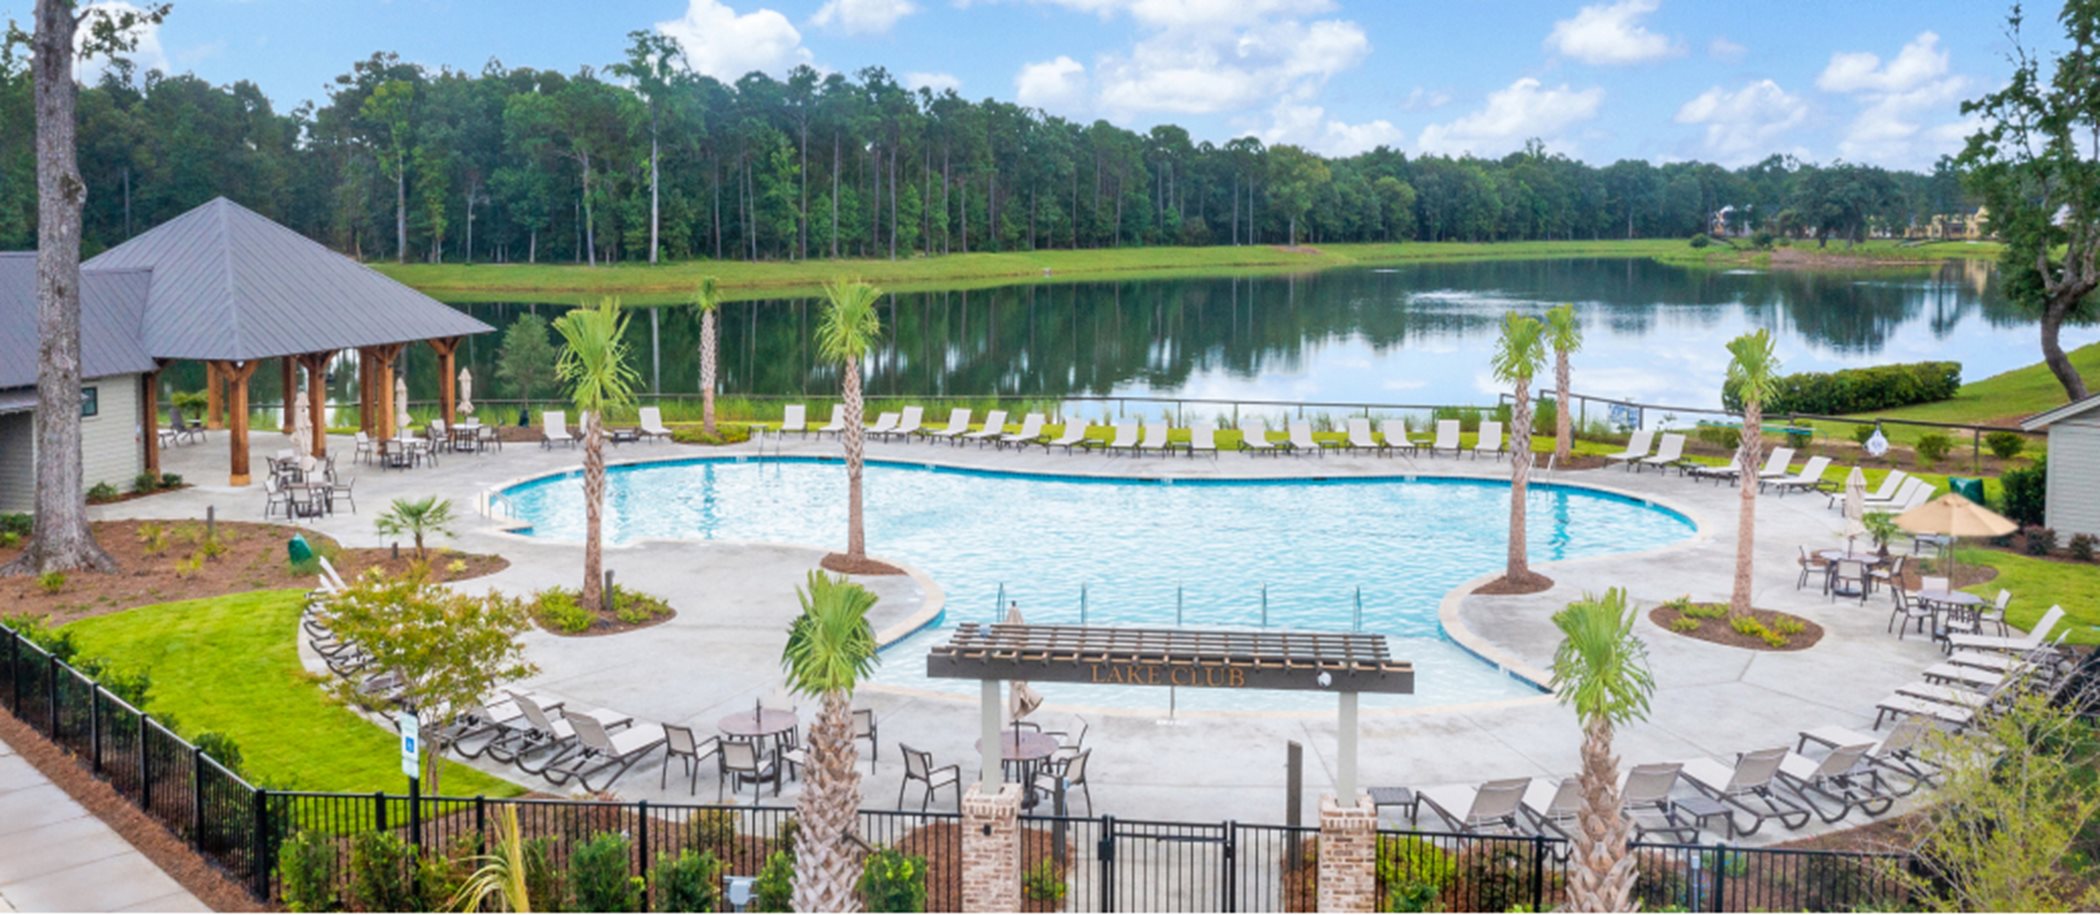 Carolina Park swimming pool